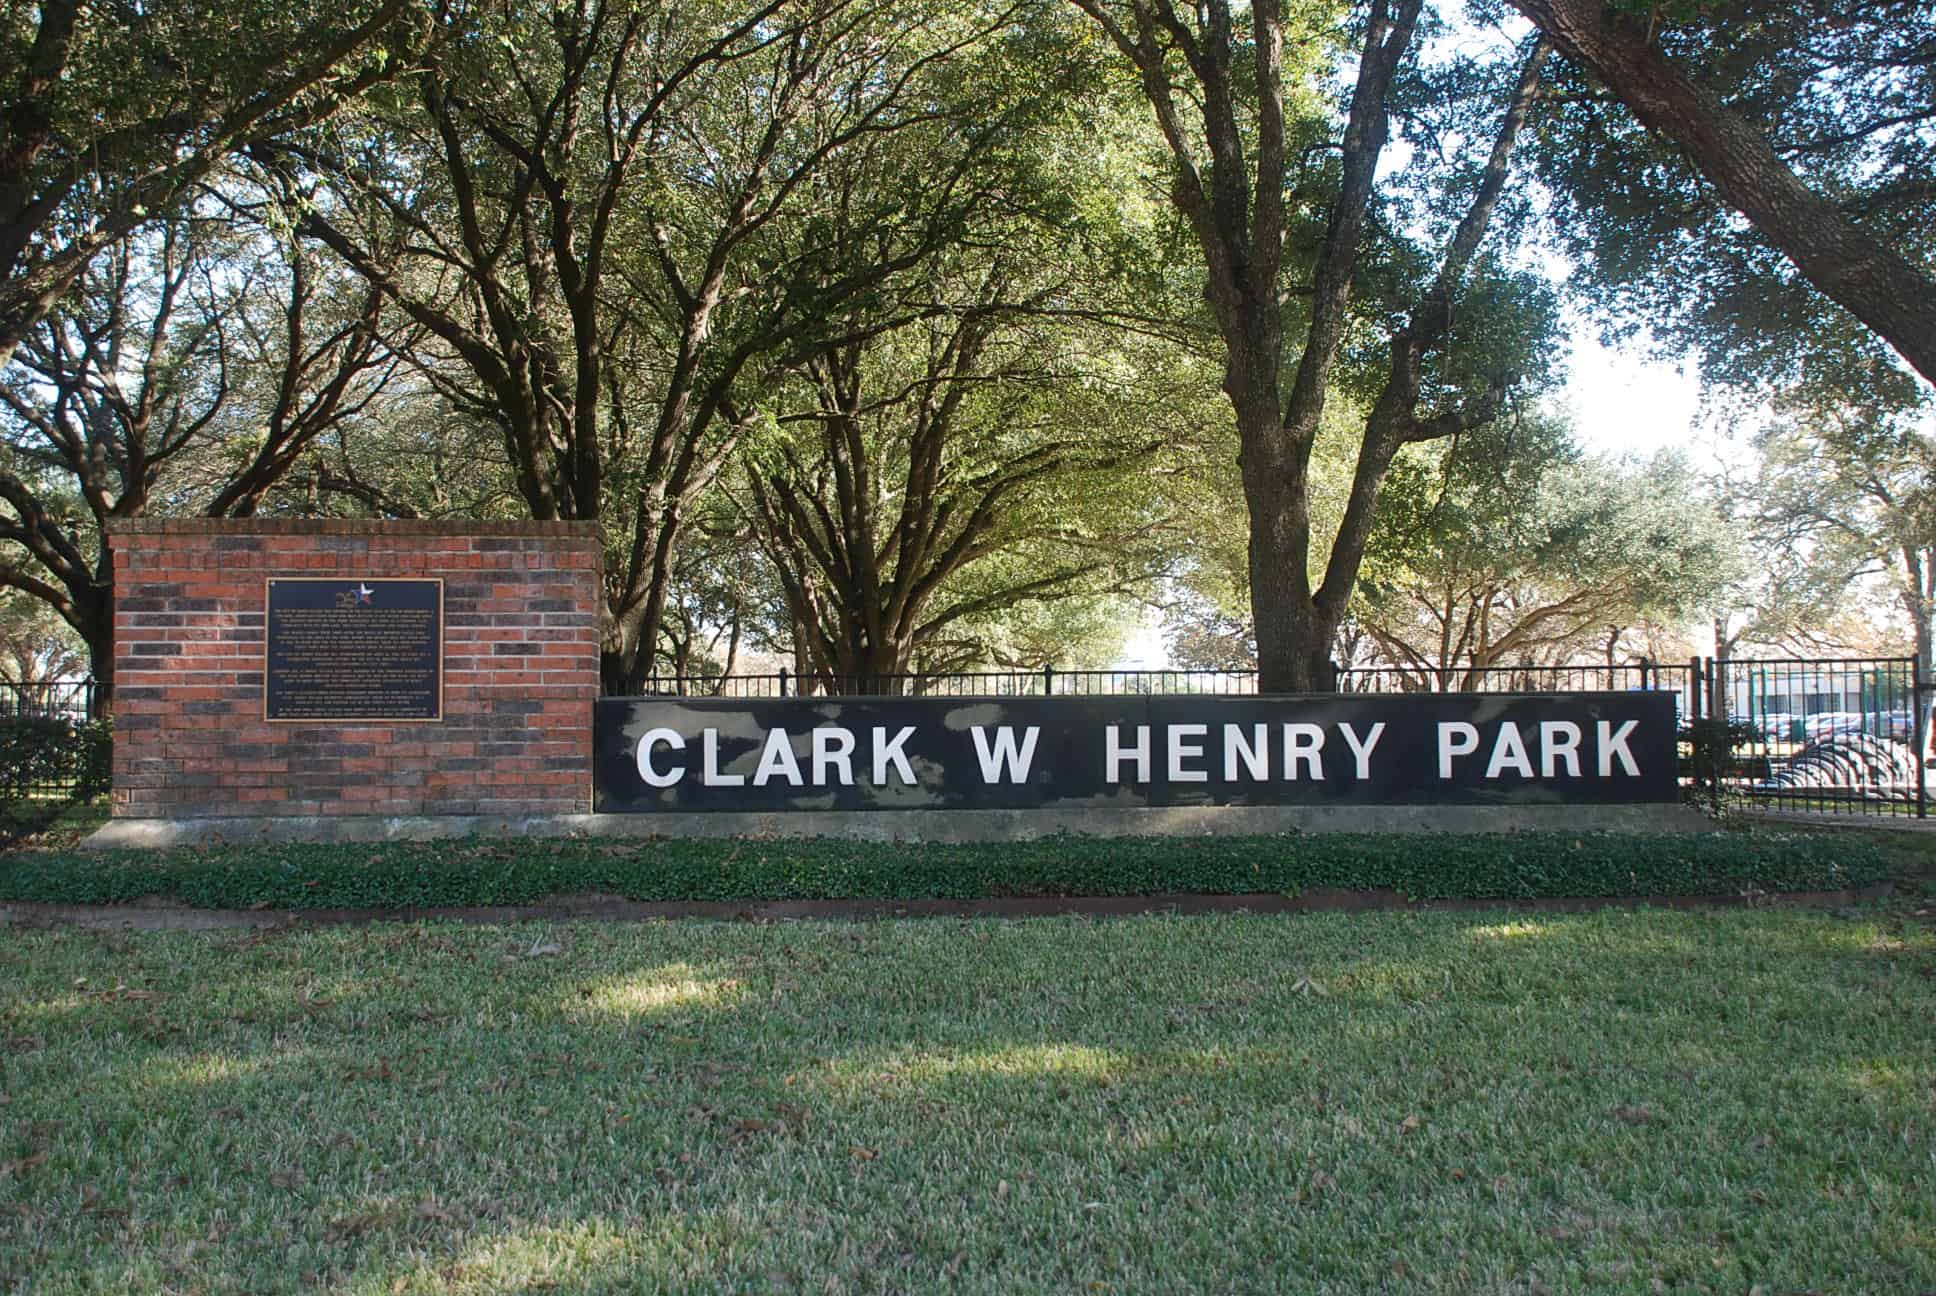 Clark W Henry Park Sign